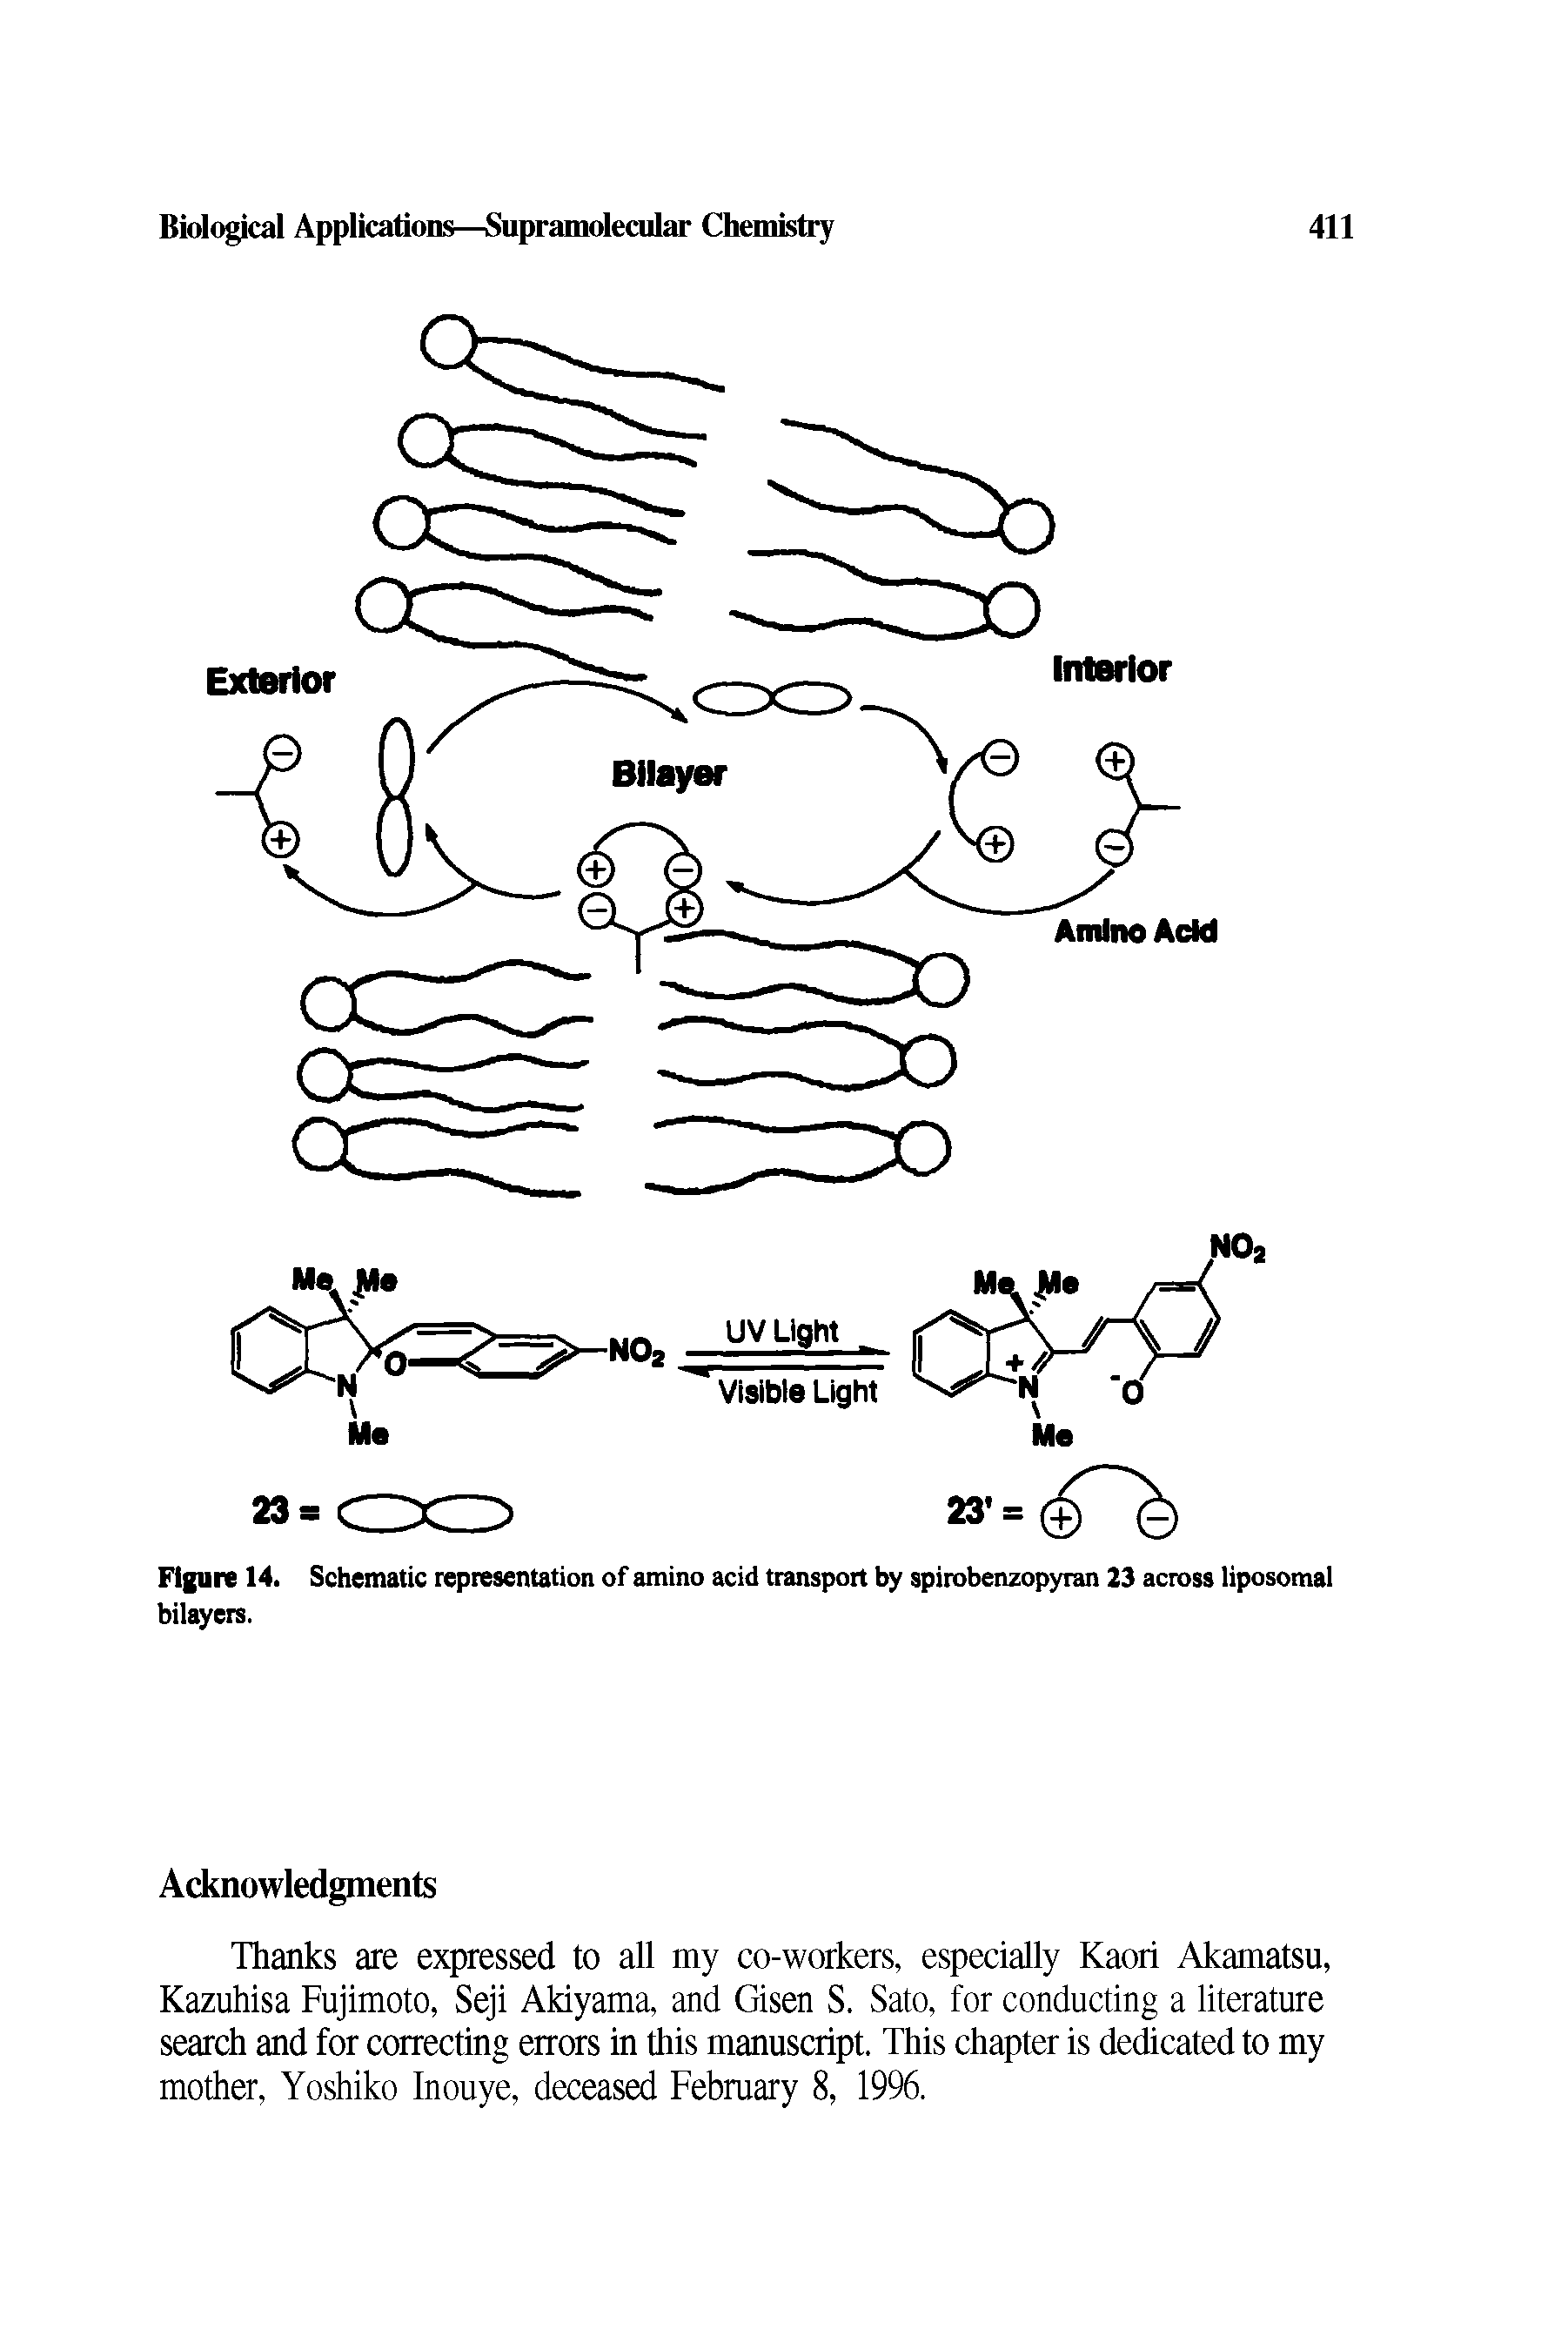 Figure 14. Schematic representation of amino acid transport by spirobenzopyran 23 across liposomal bilayers.